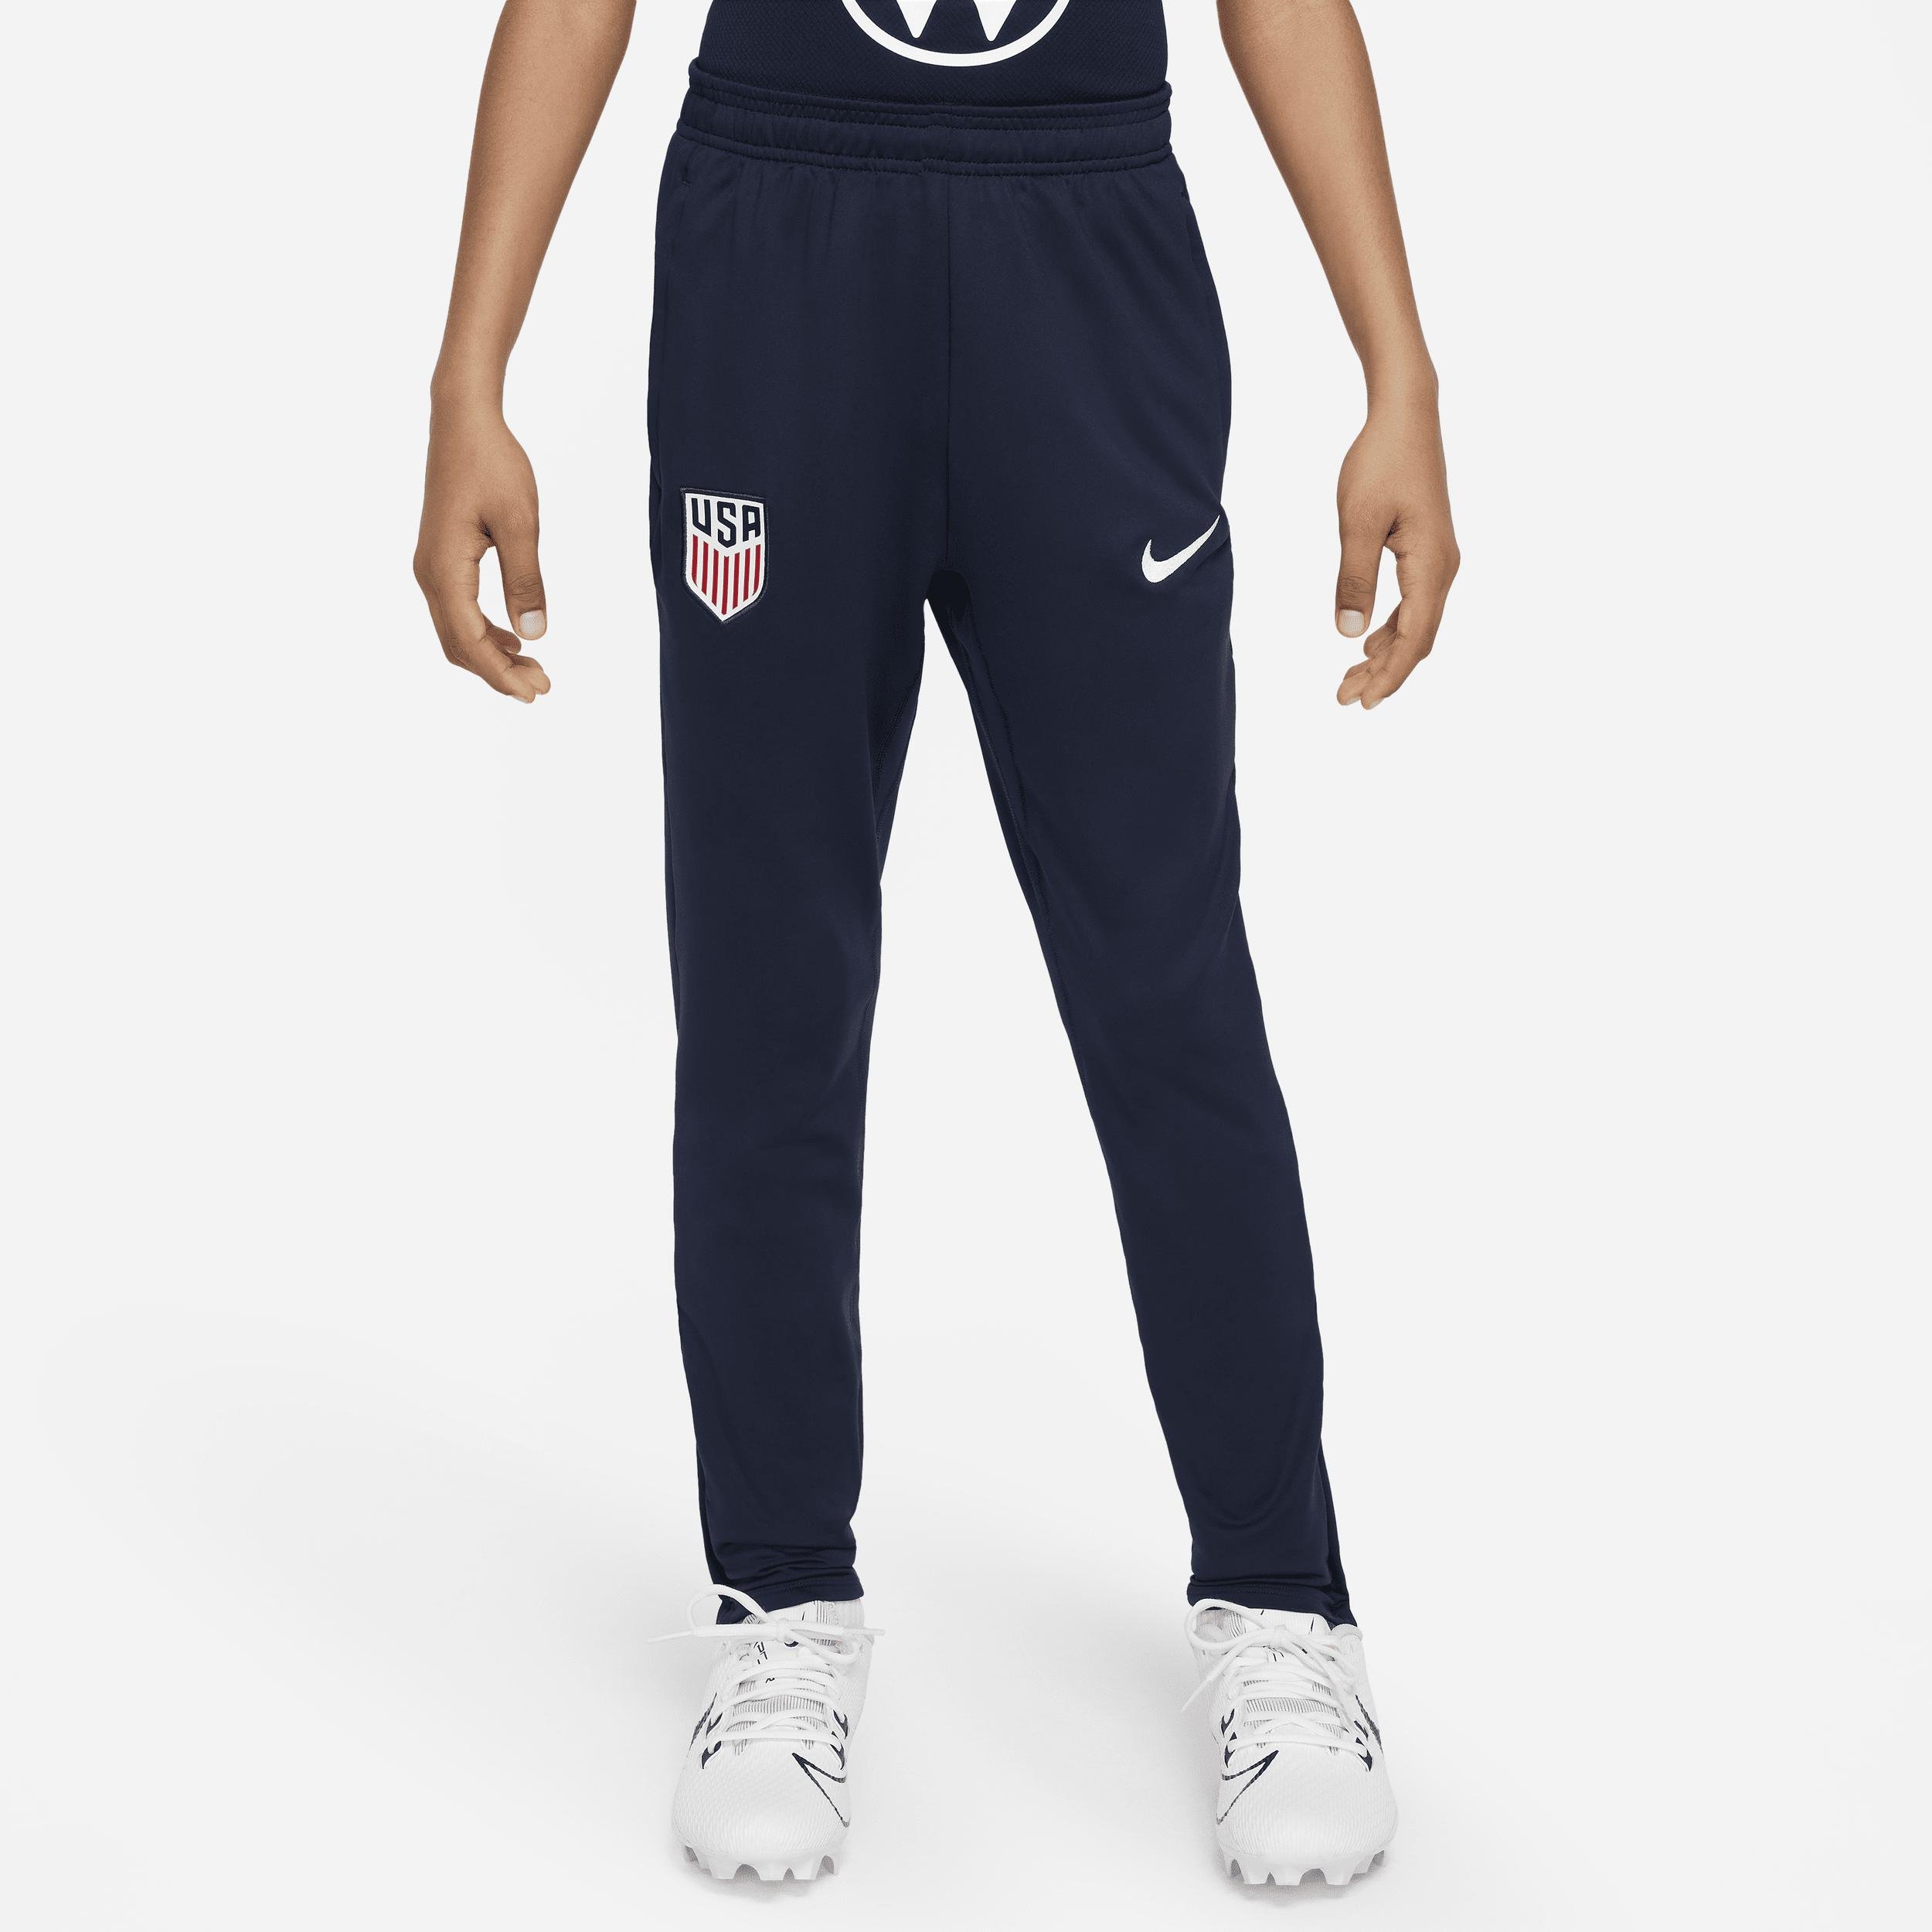 USMNT Strike Big Kids' Nike Dri-FIT Soccer Knit Pants by NIKE